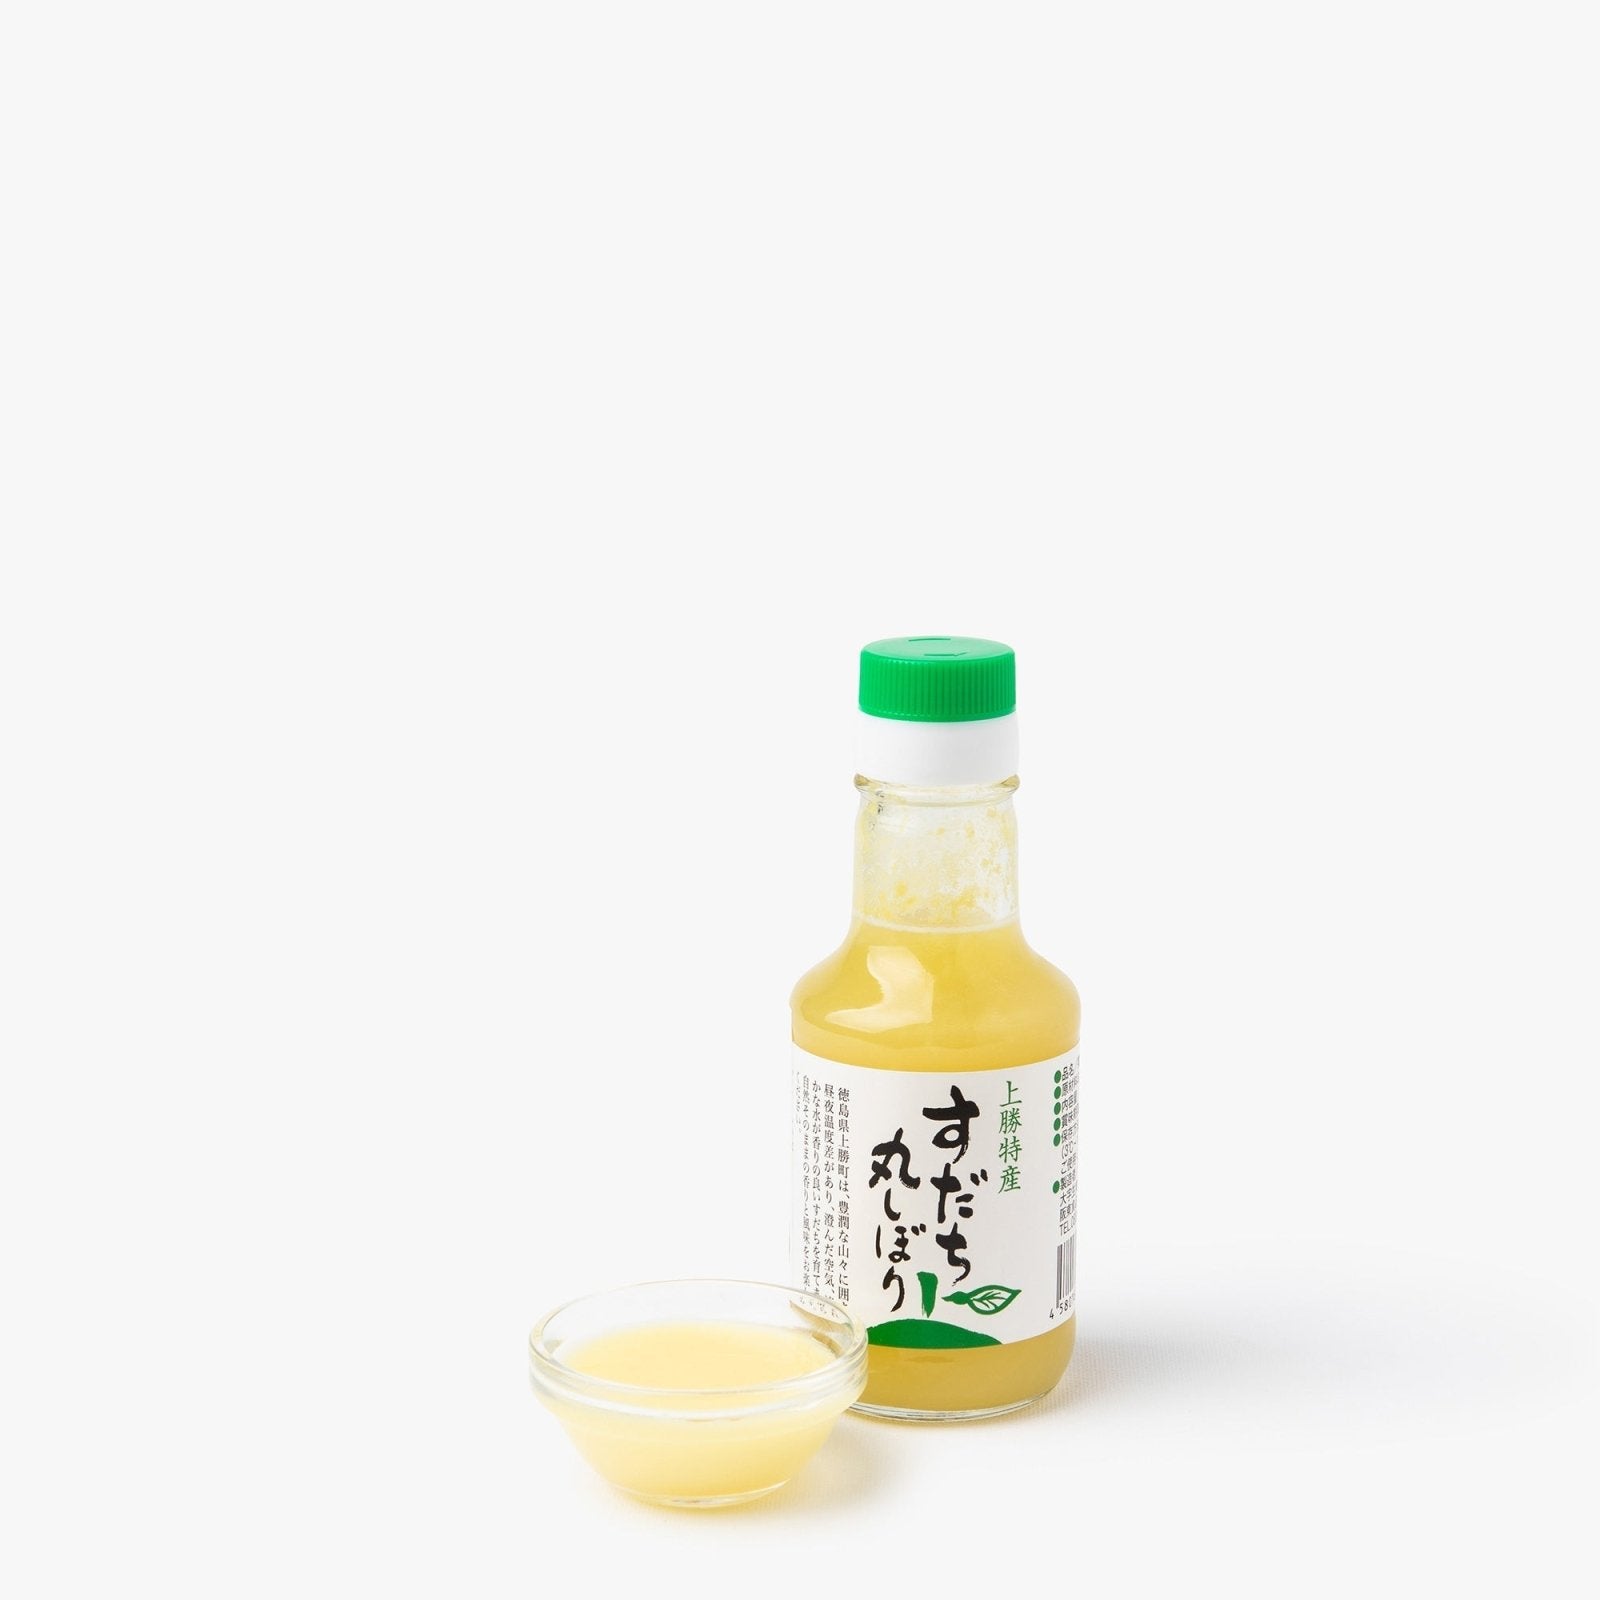 Jus d'agrume sudachi 100% japonais - 150ml - Bando Farm - iRASSHAi